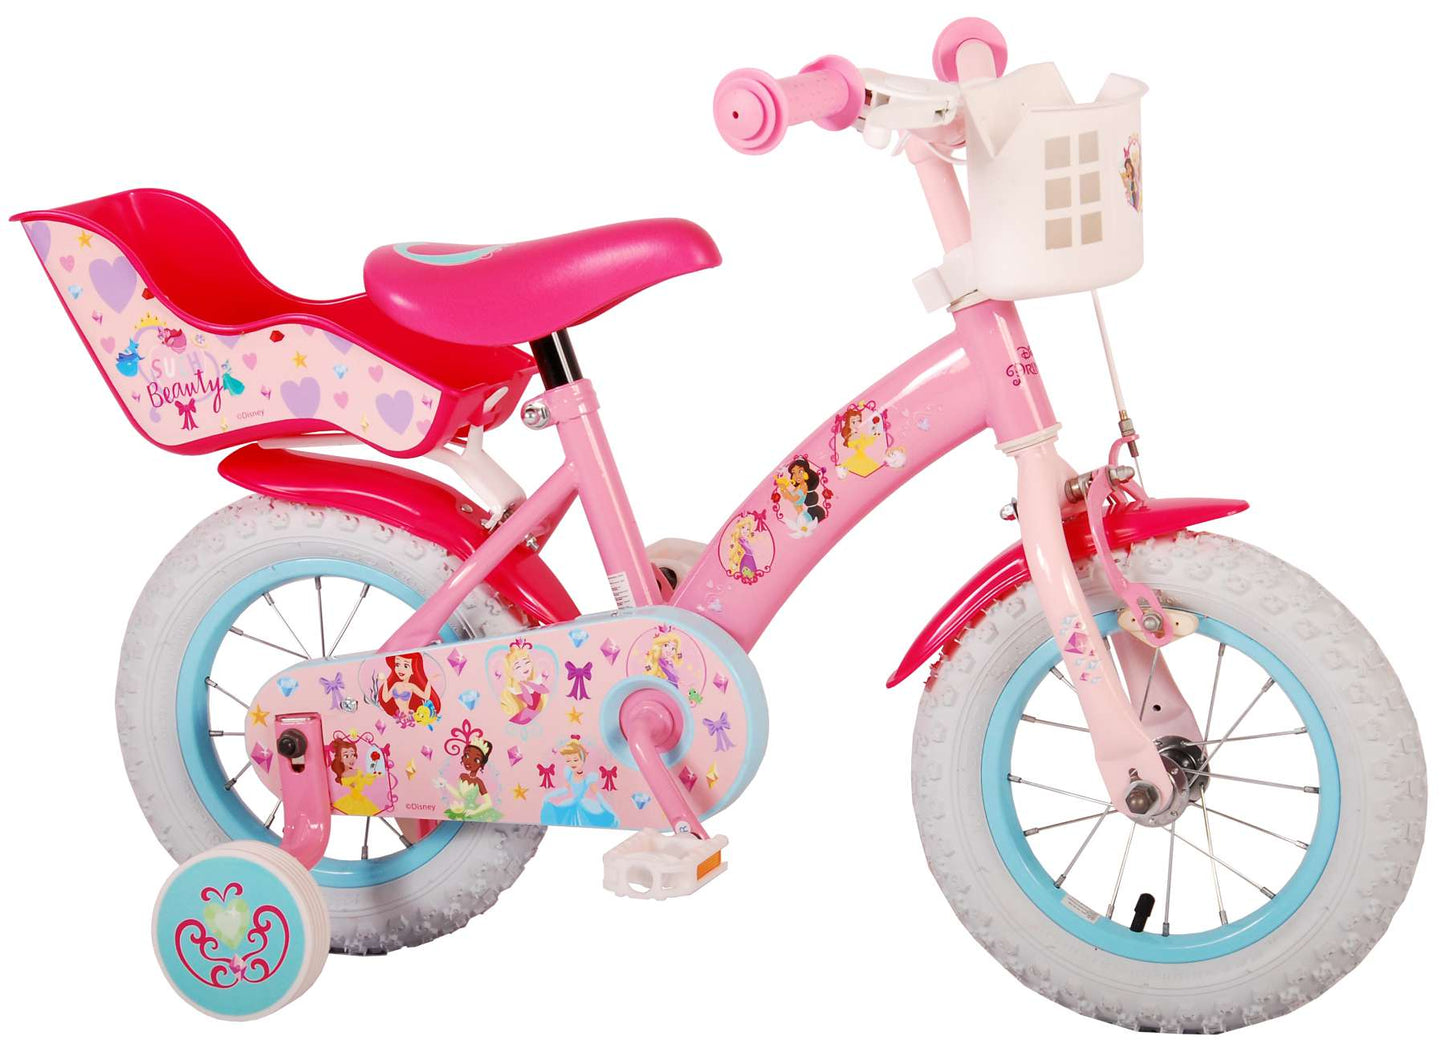 Yipeeh 12 Bicycle Princess 21209